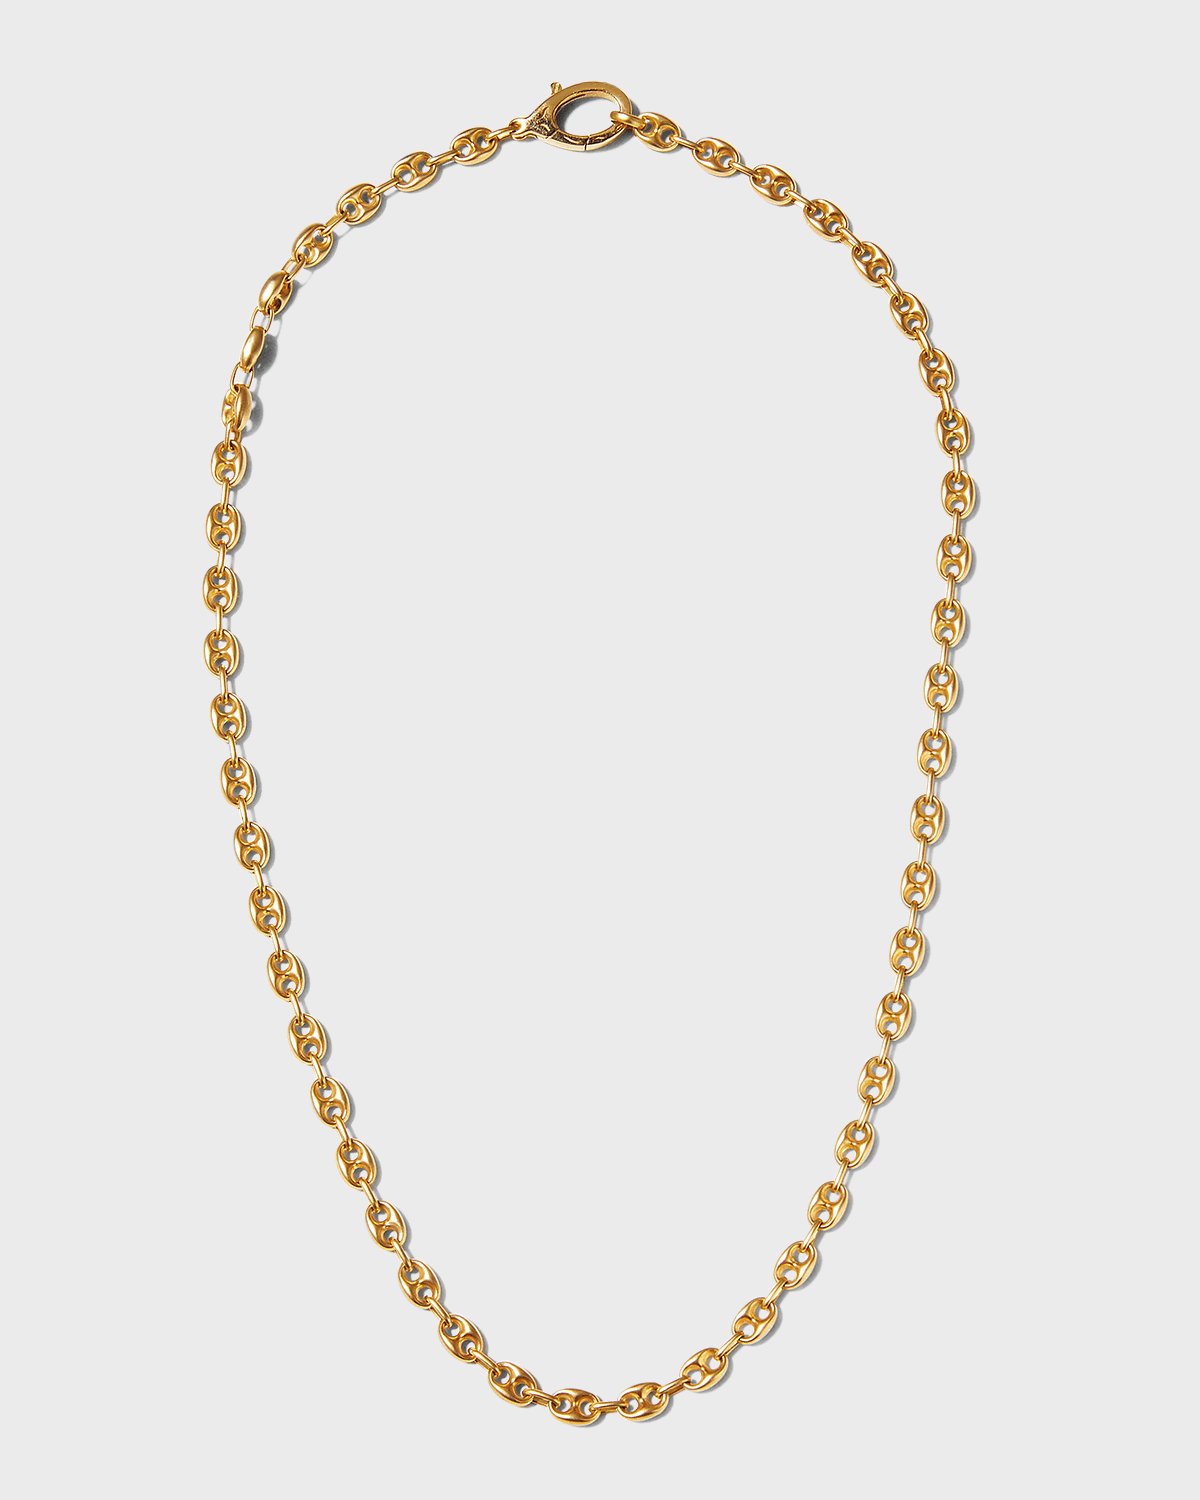 Yellow Gold Marine Matte Chain Necklace, 52cm